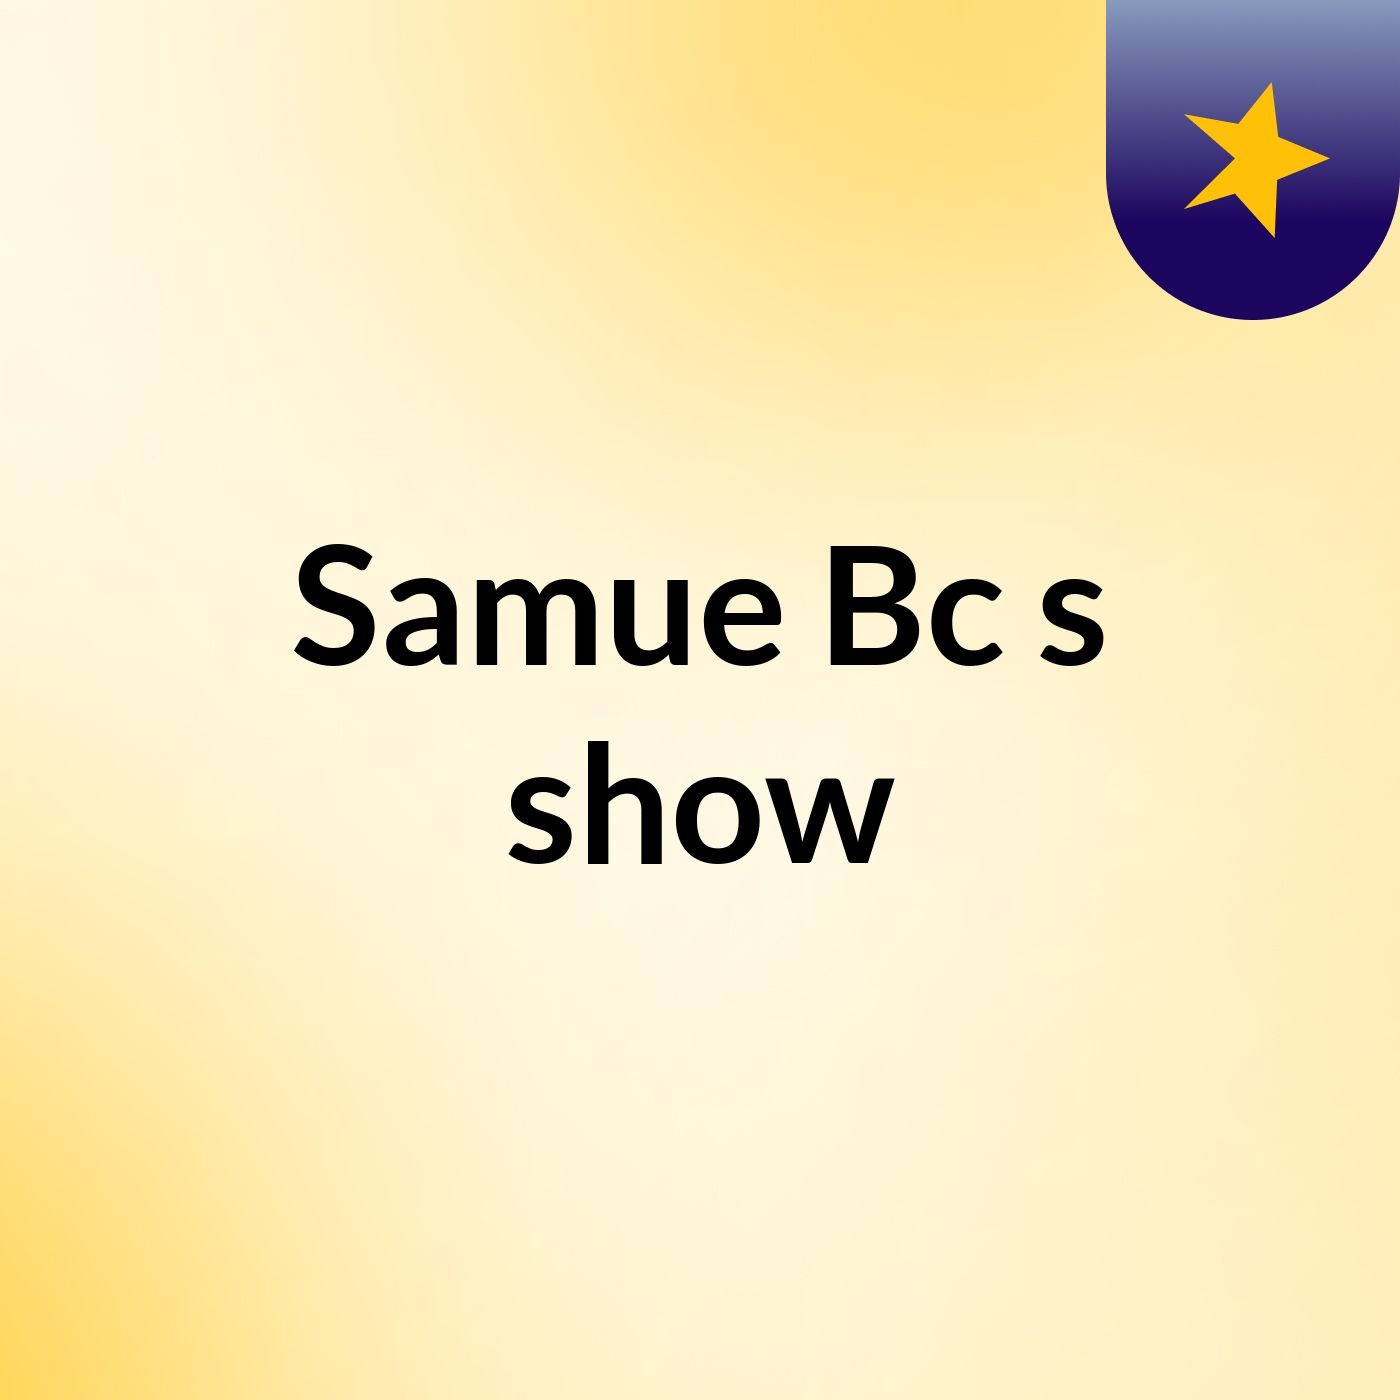 Samue Bc's show